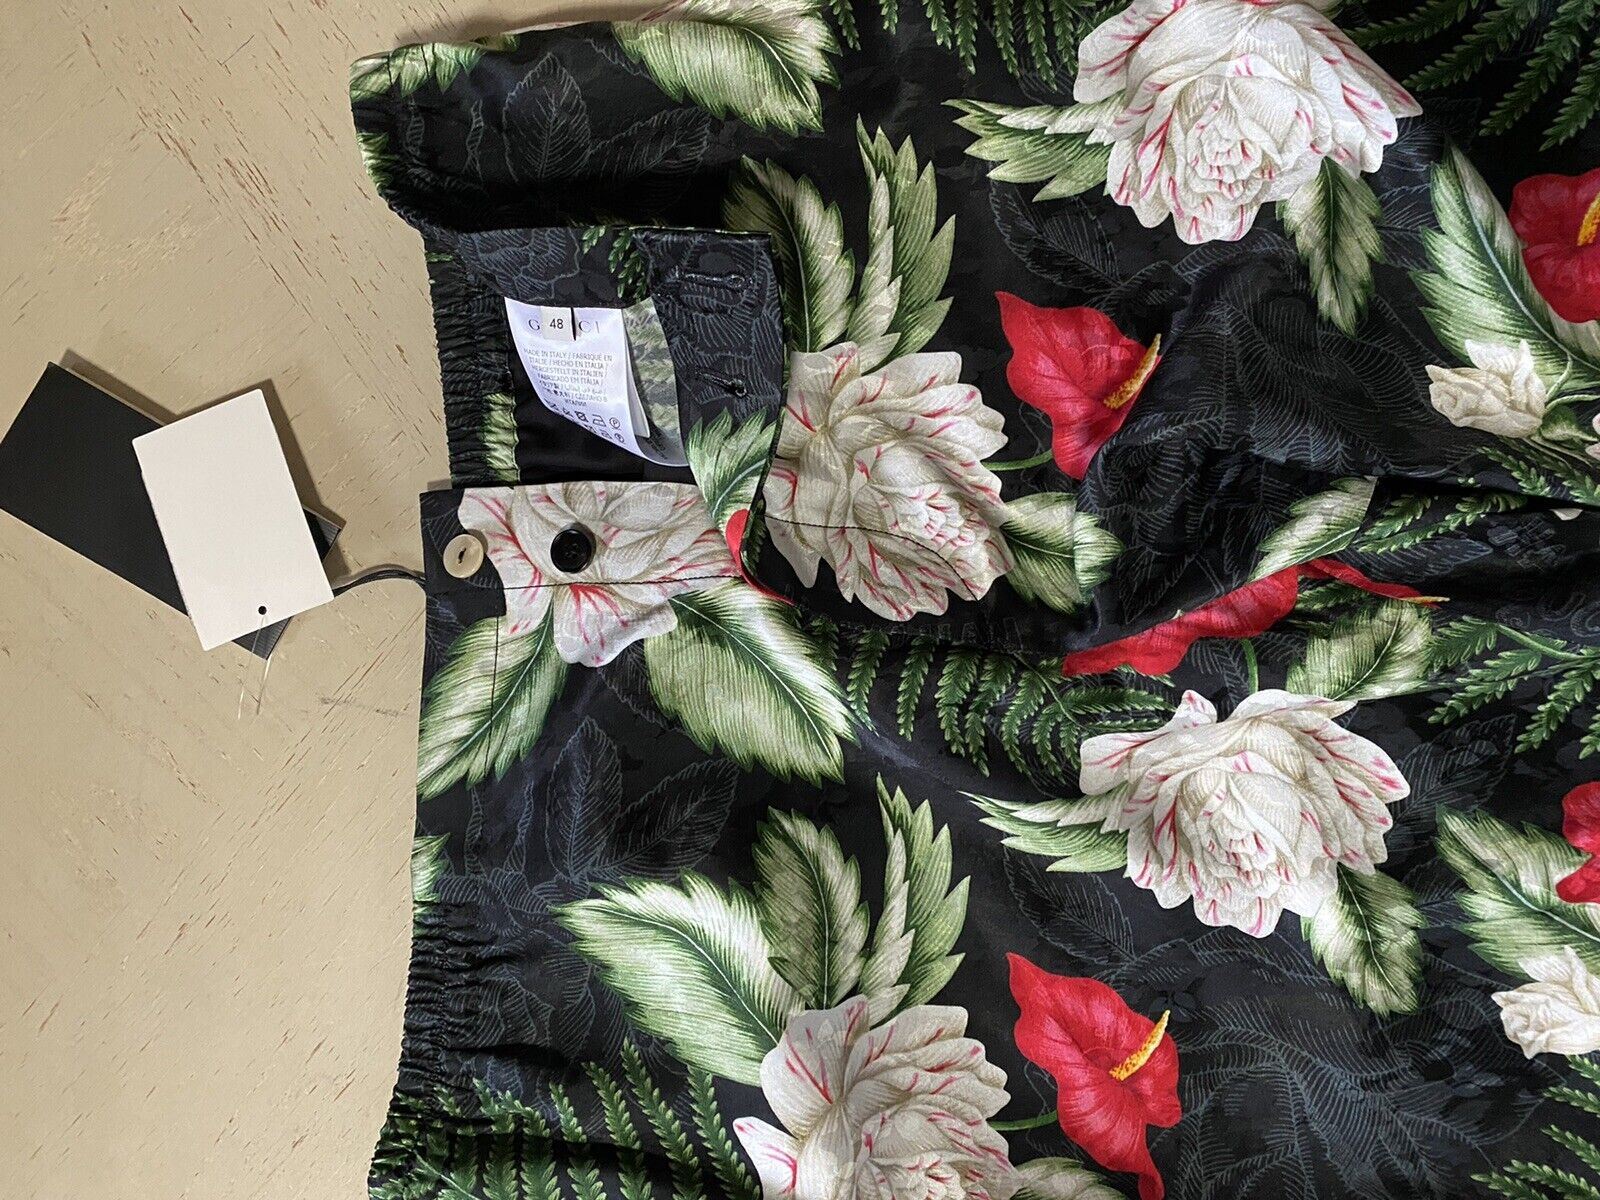 СЗТ $980 Gucci Мужские короткие брюки Gucci Soul Monogram черного/зеленого/мул. 34 США/50 в.д.